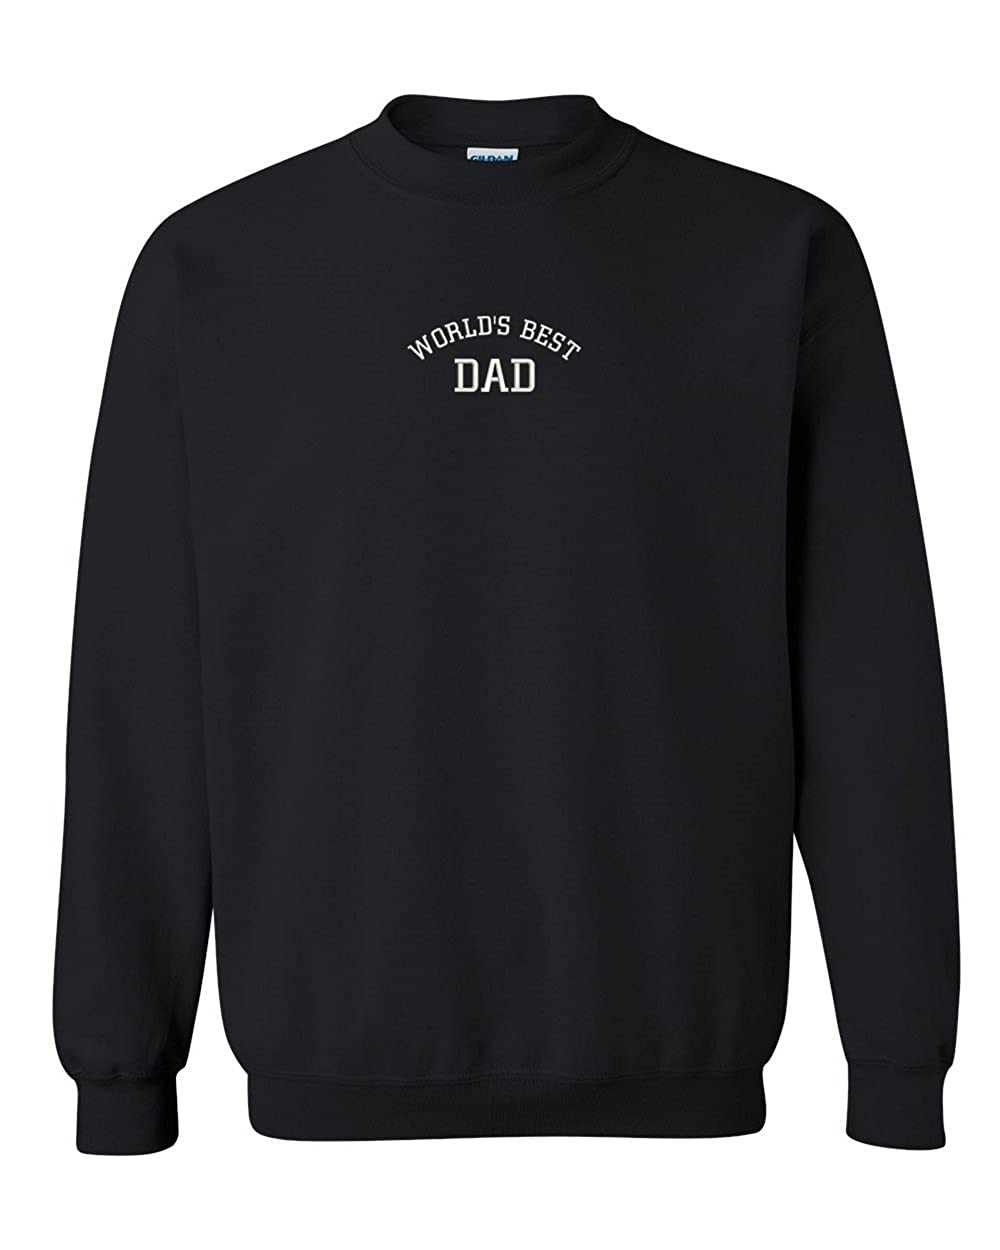 Trendy Apparel Shop Worl's Best Dad Embroidered Crewneck Sweatshirt - Black - 2XL